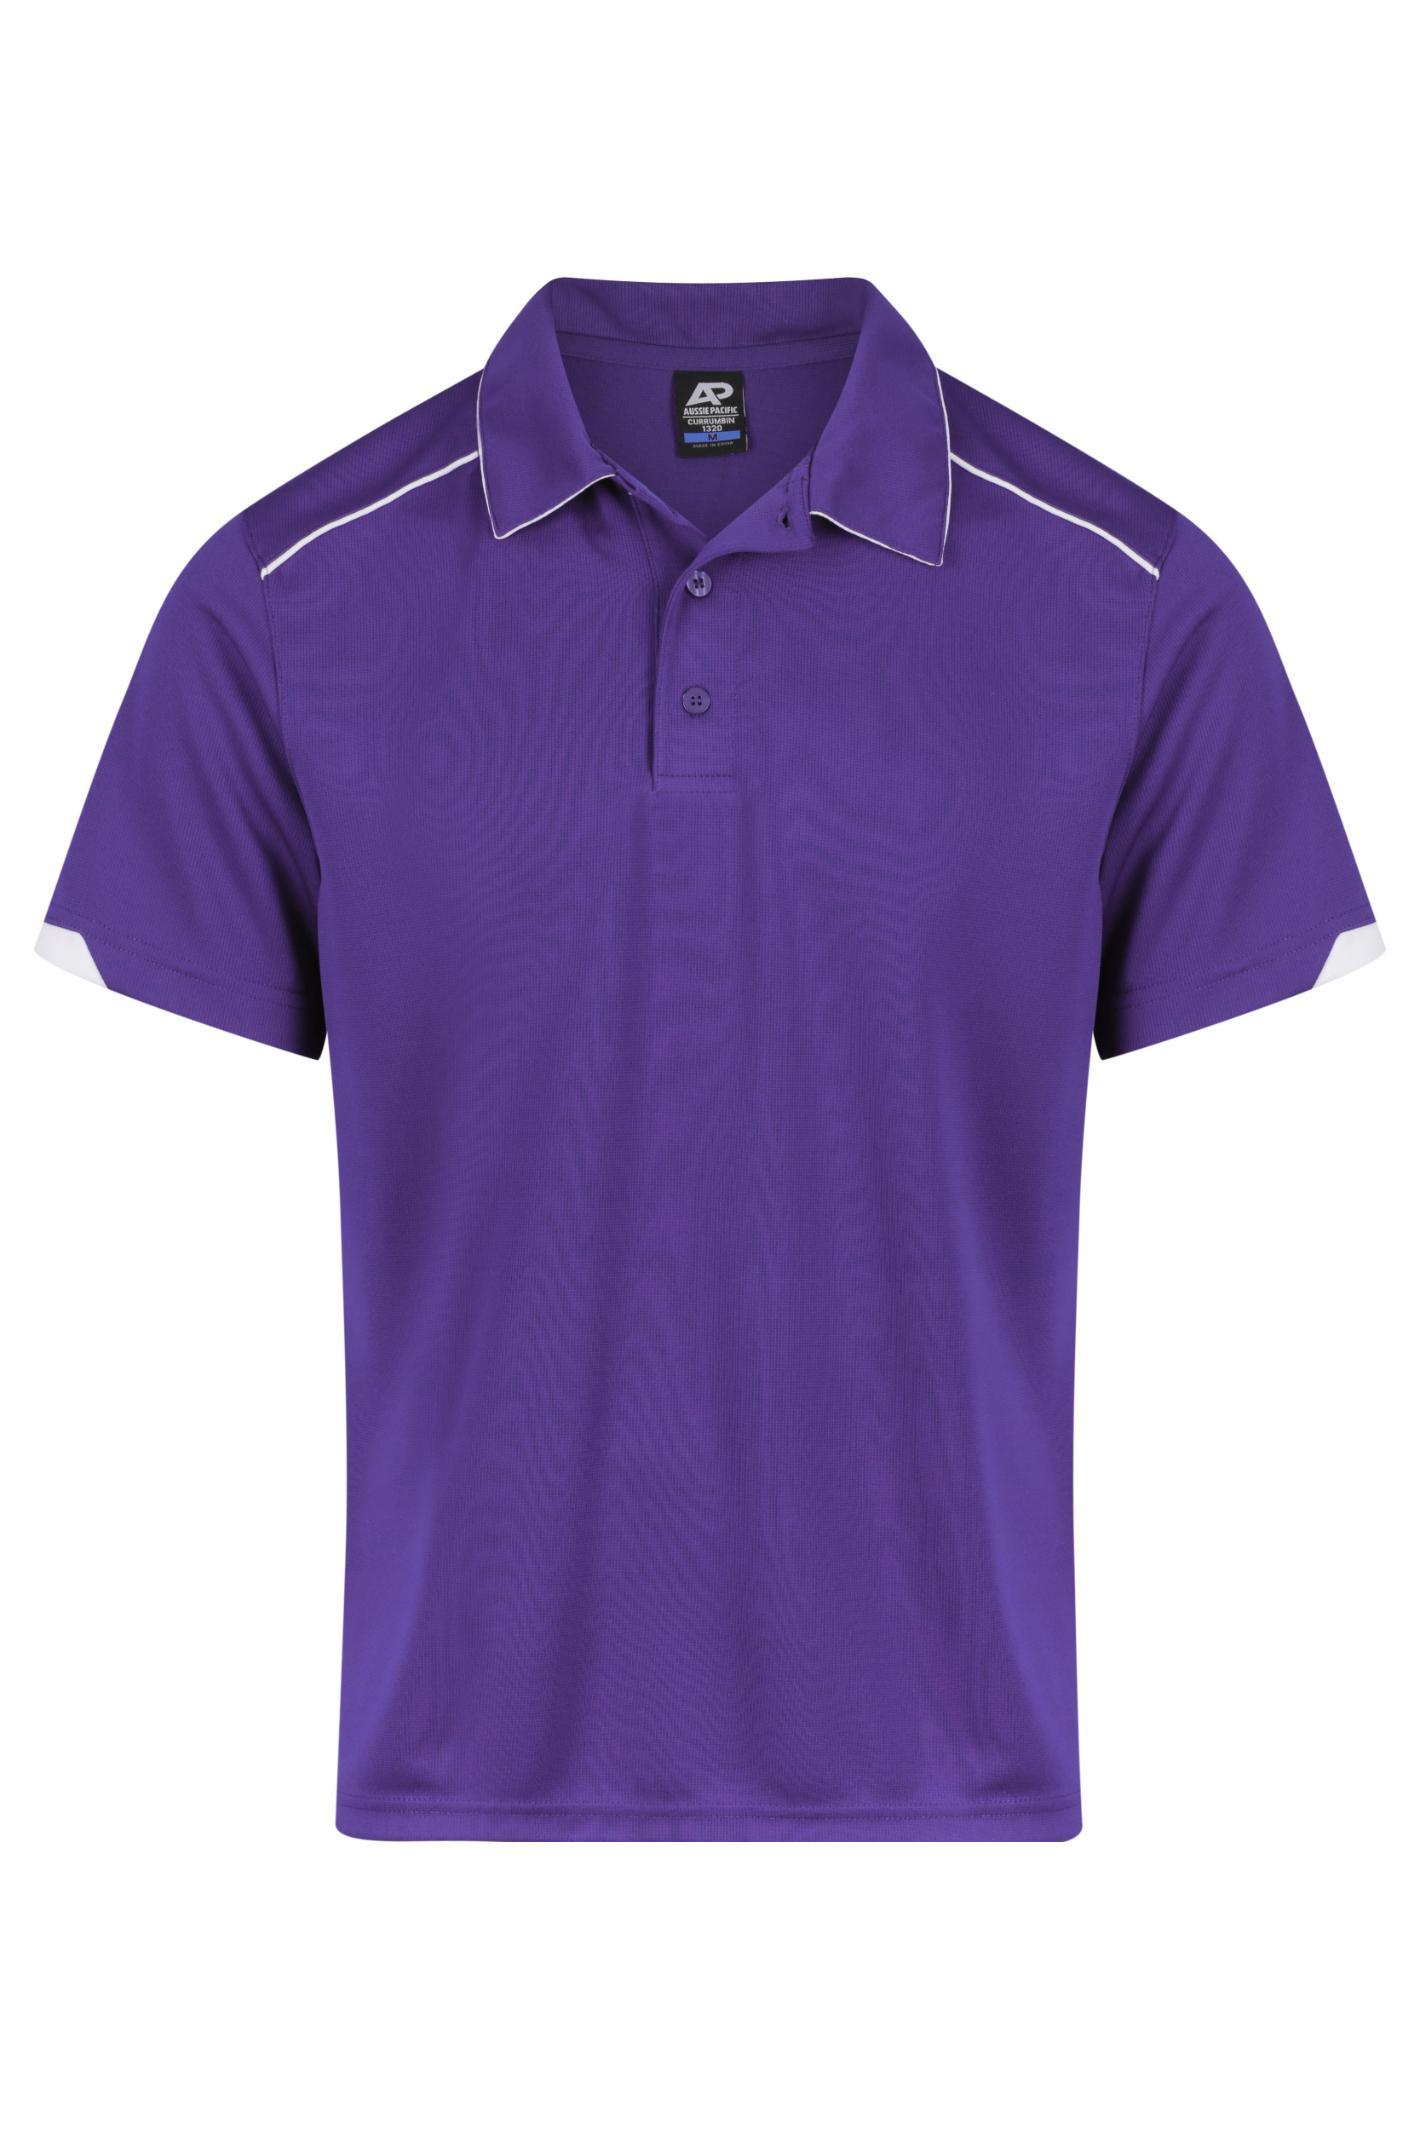 Currumbin Workwear Polo Shirts - Purple/White